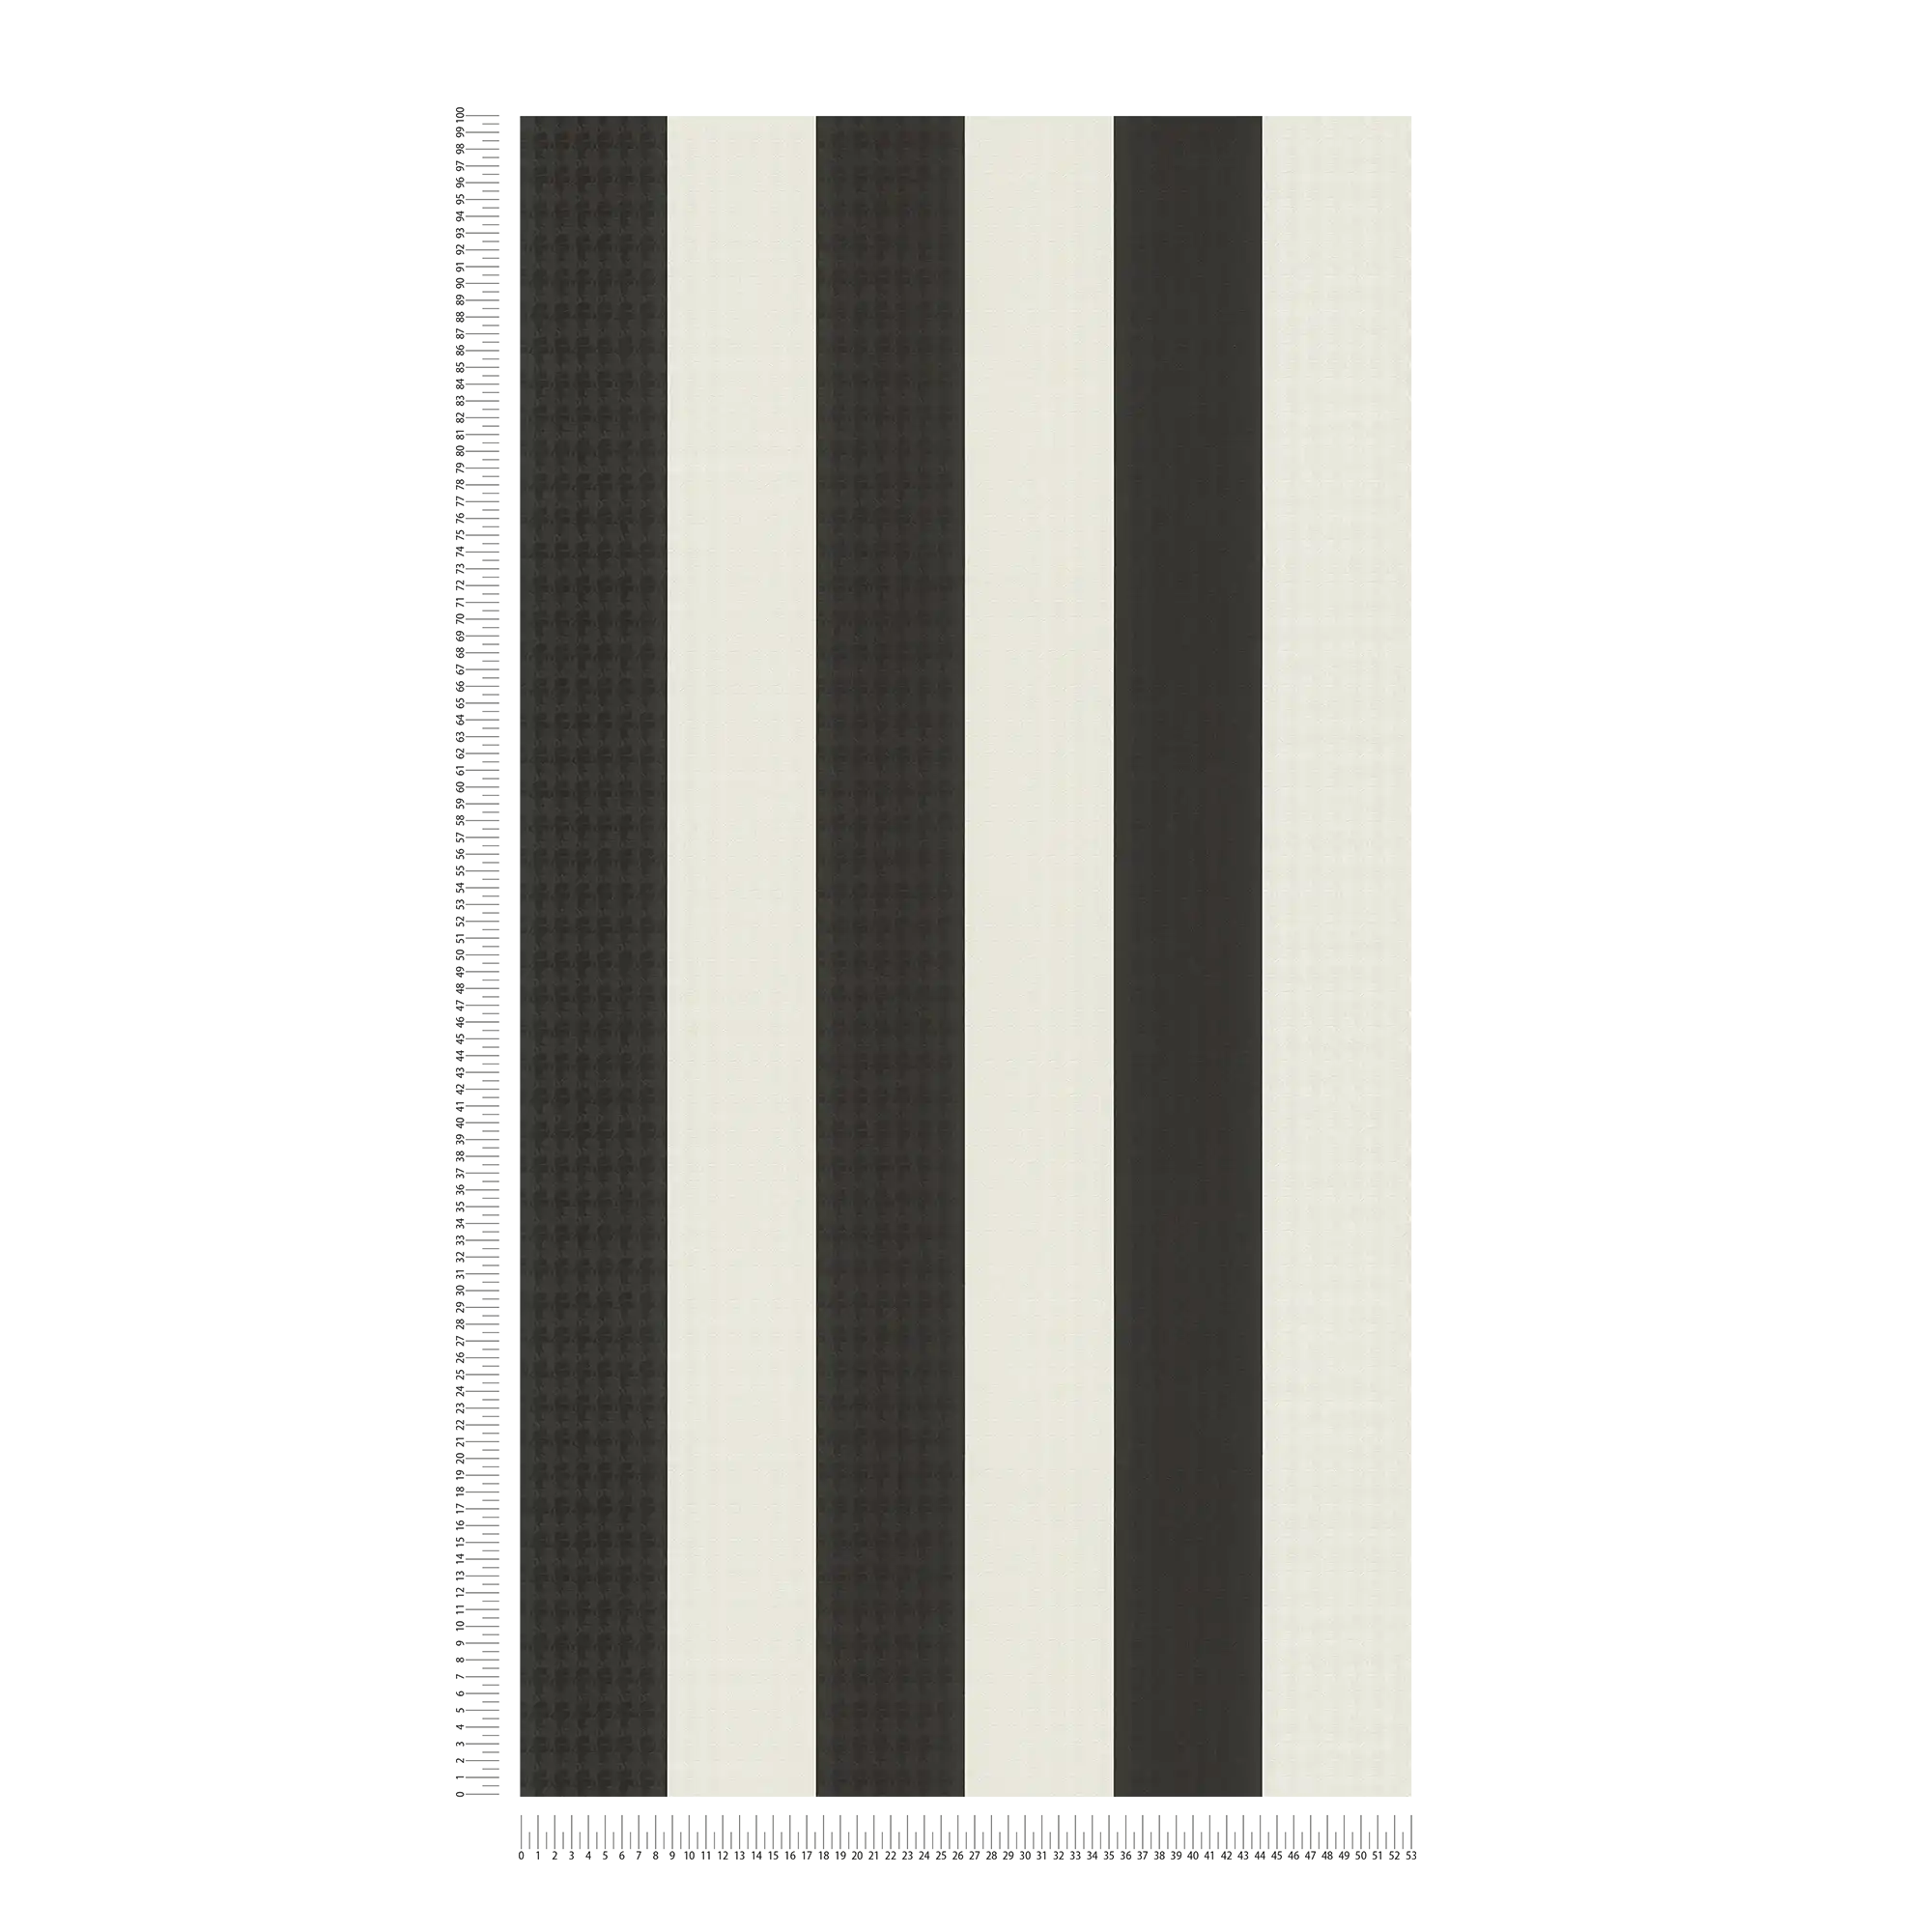             Papier peint Karl LAGERFELD rayures & motifs texturés - noir, blanc
        